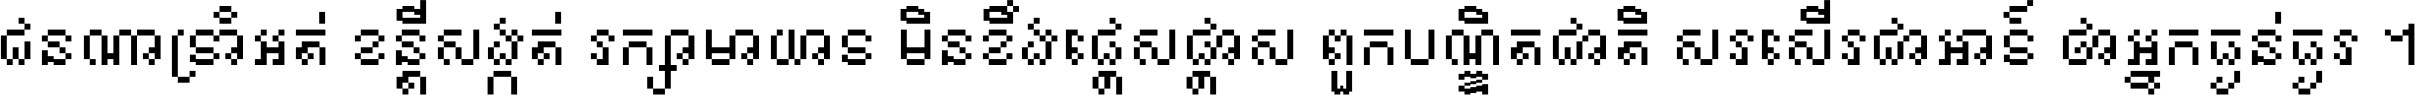 Kh Pixel Retro 8-bit Text